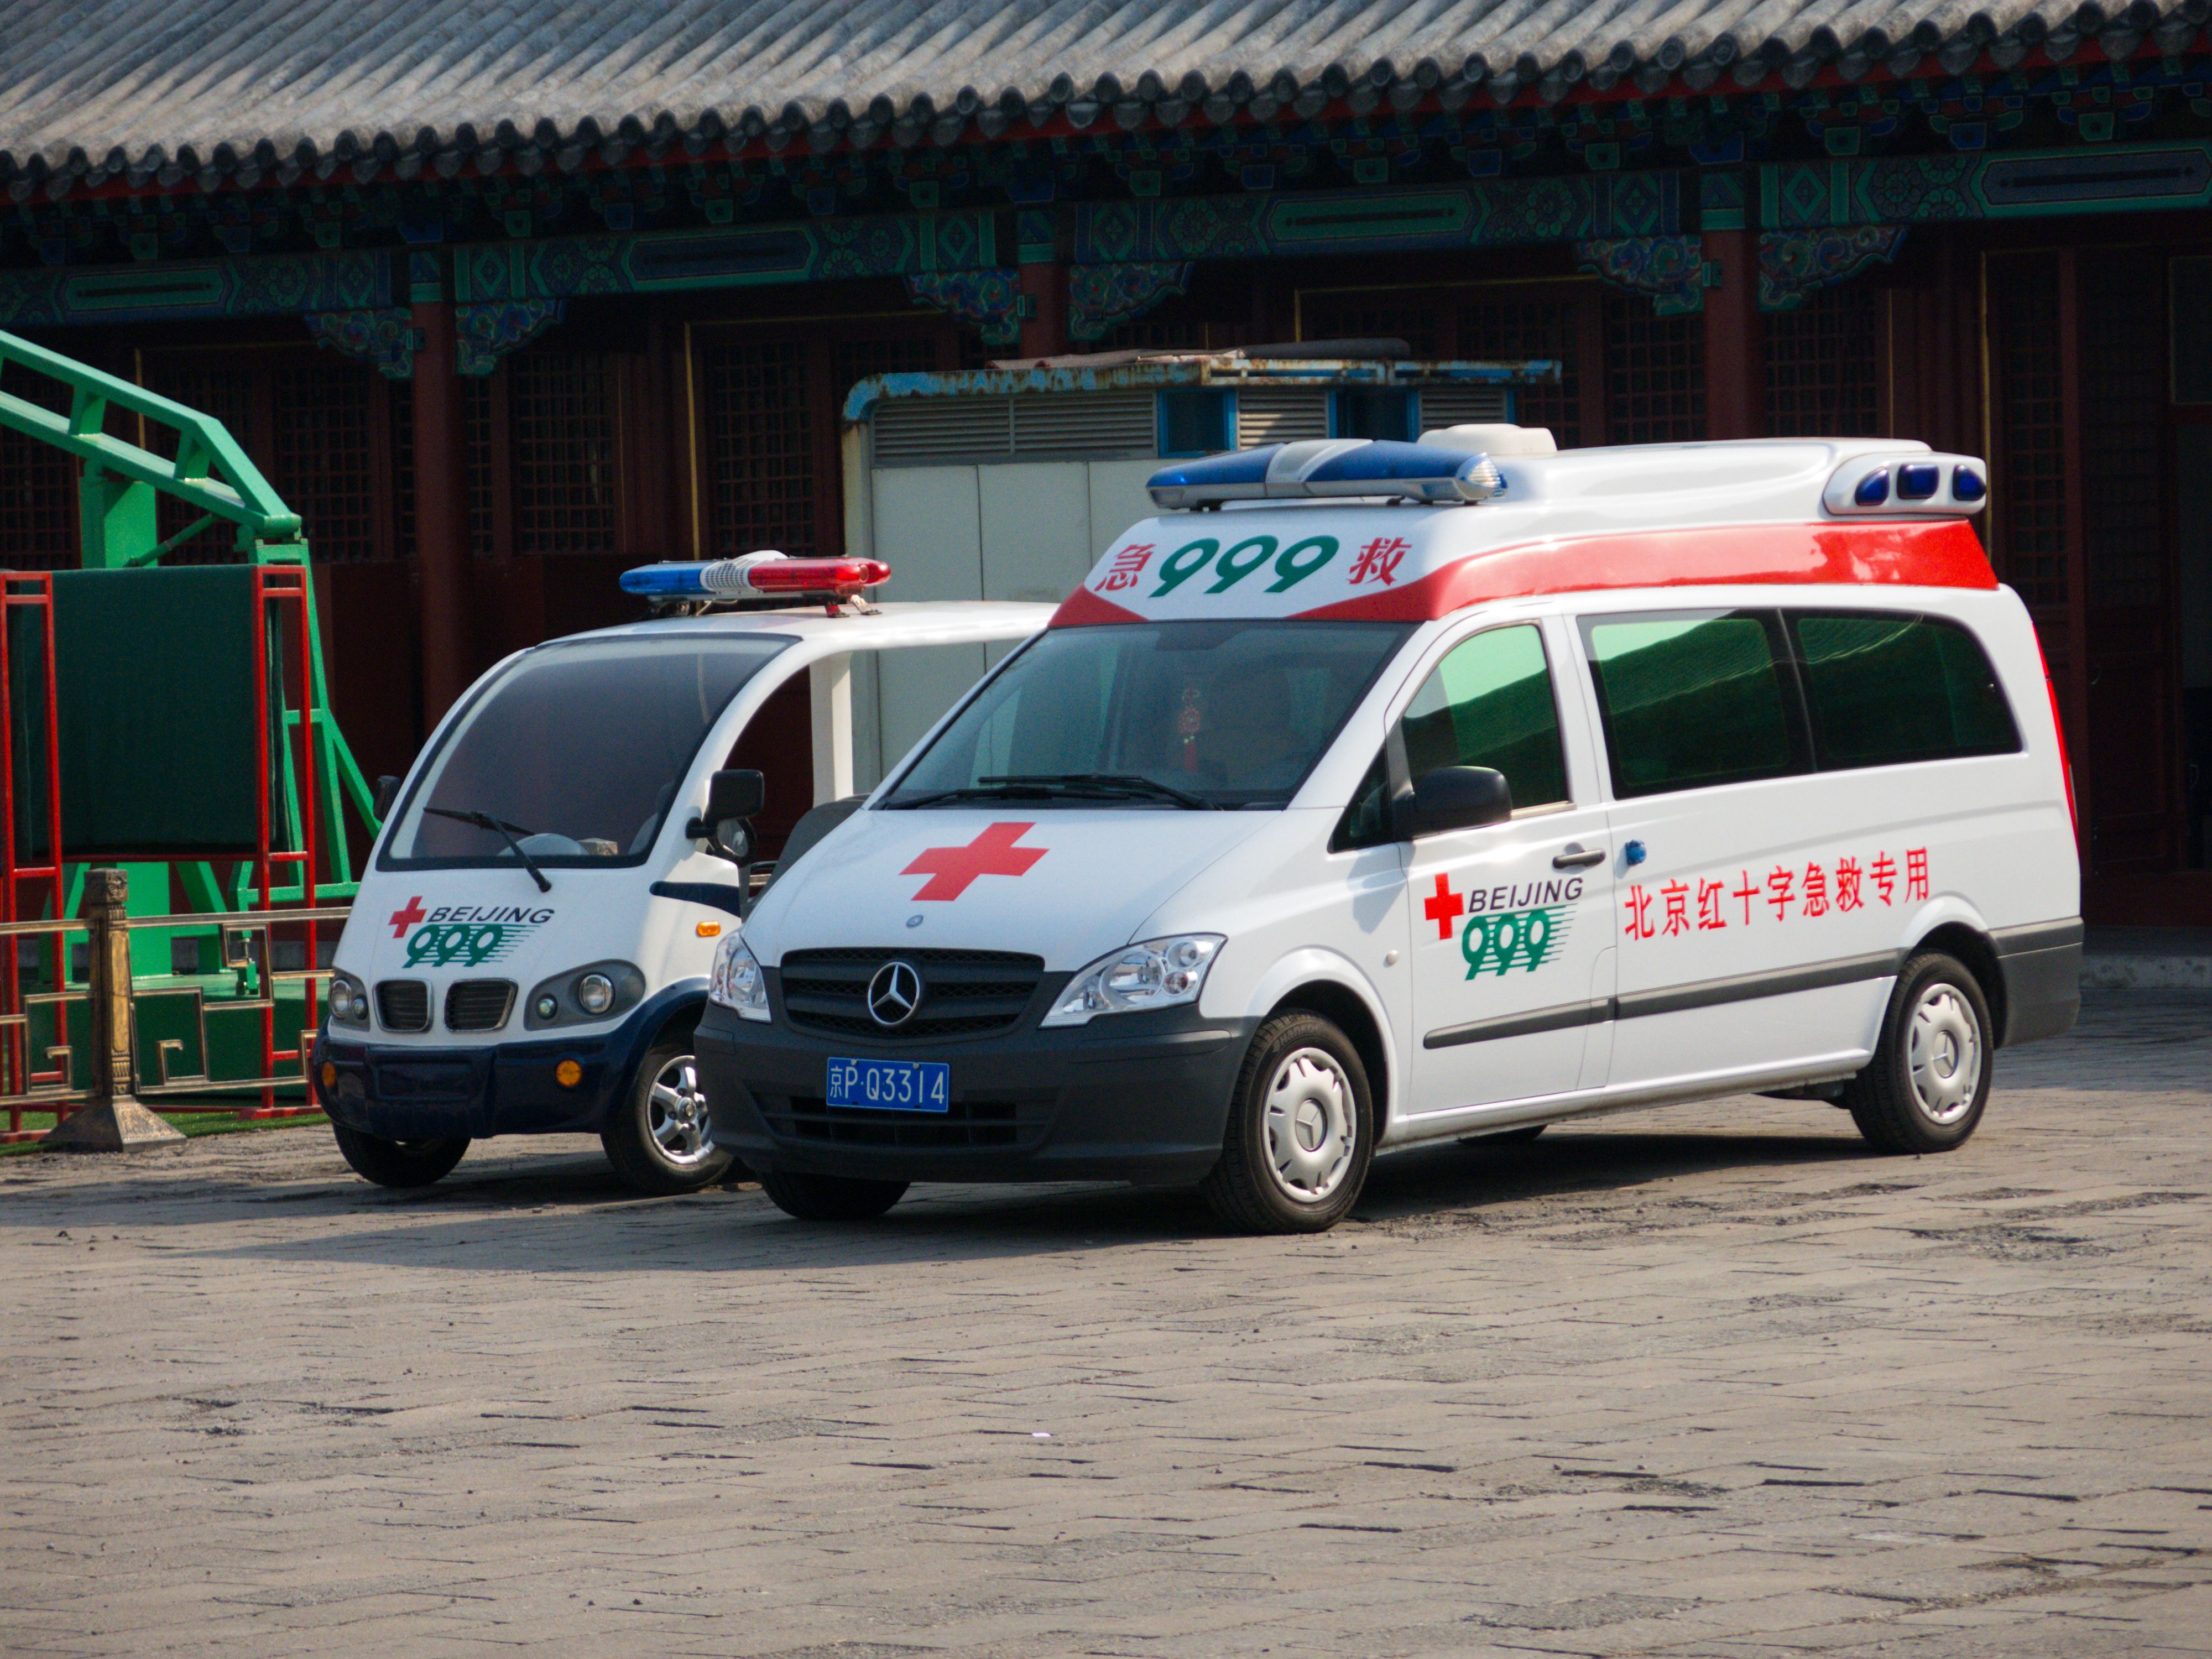 Ambulància Xina / Wikimedia Commons